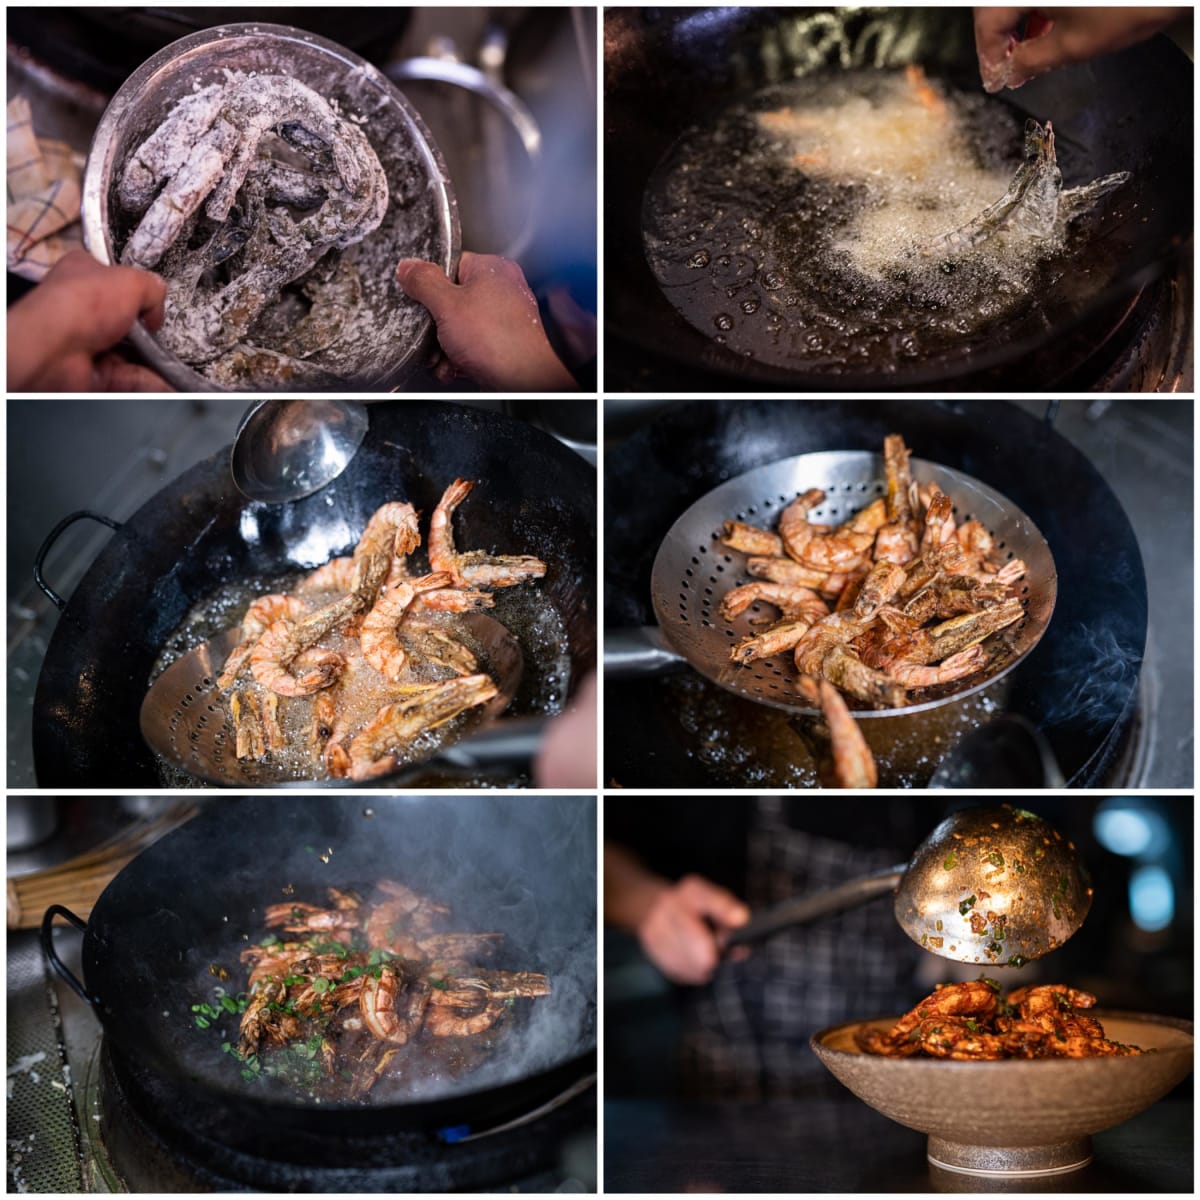 Restované krevety po šanghajsku z restaurace Sia